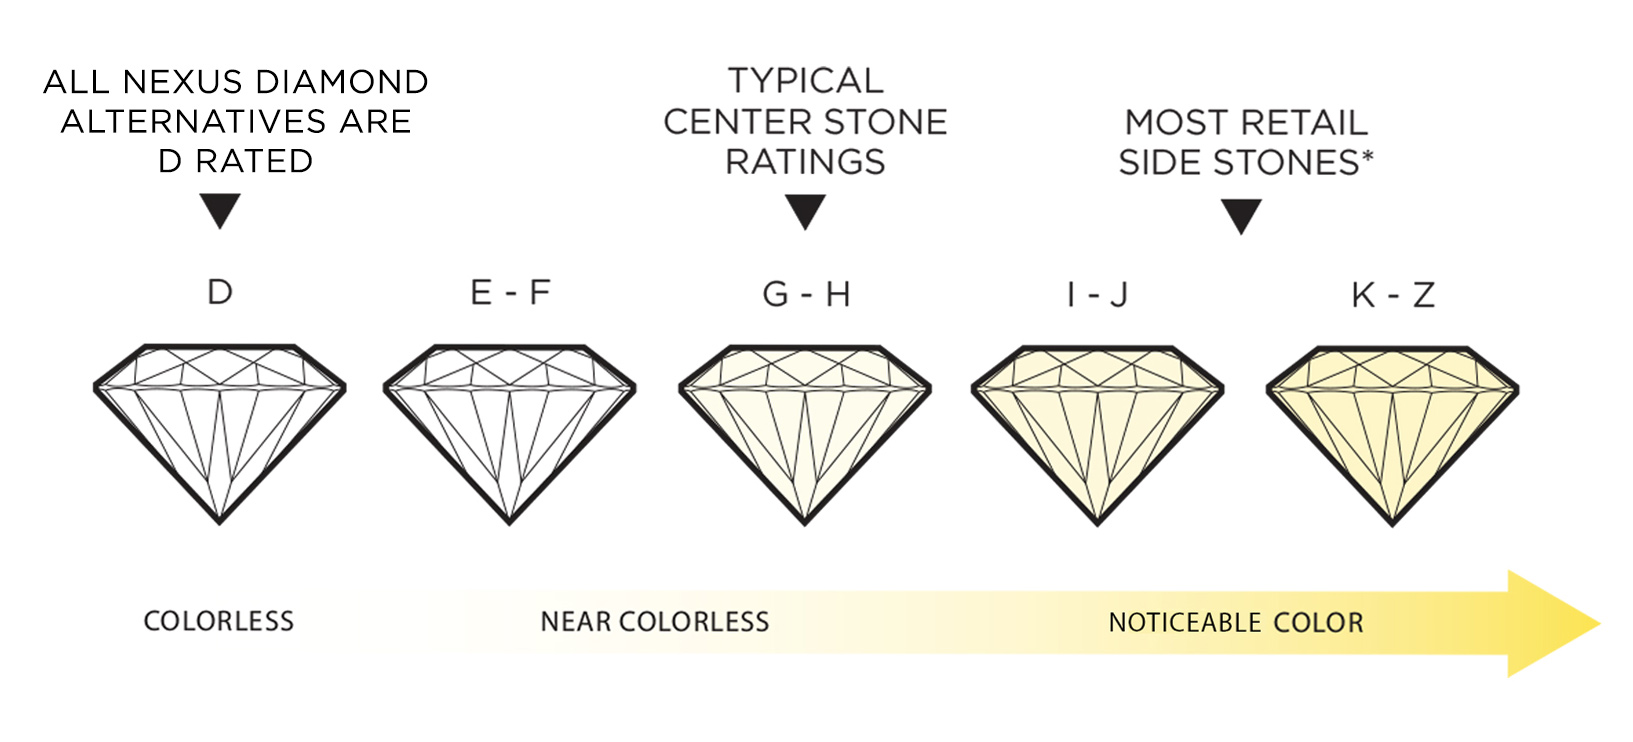 Nexus Diamond stones in comparison to most retail stones